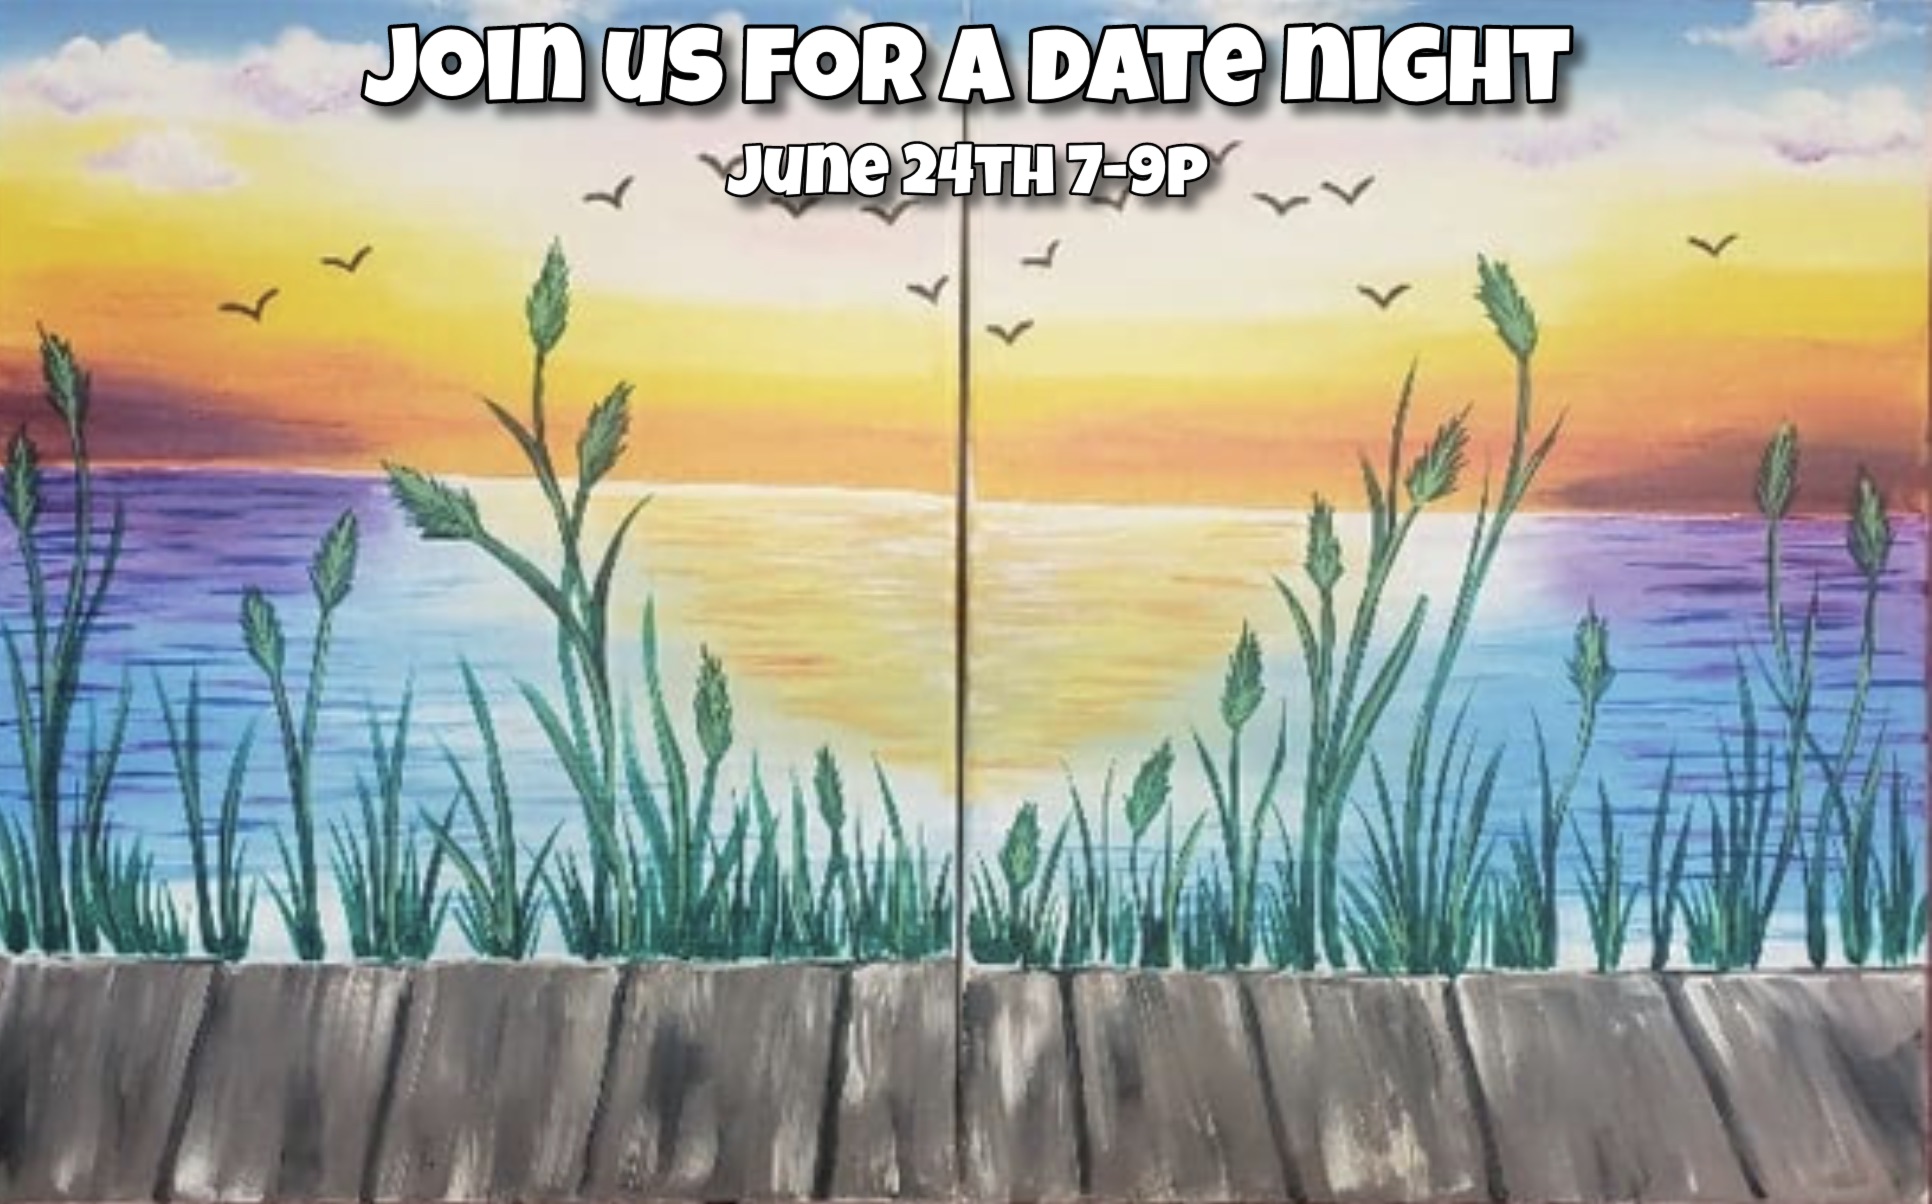 Date Night at Riverwalk!